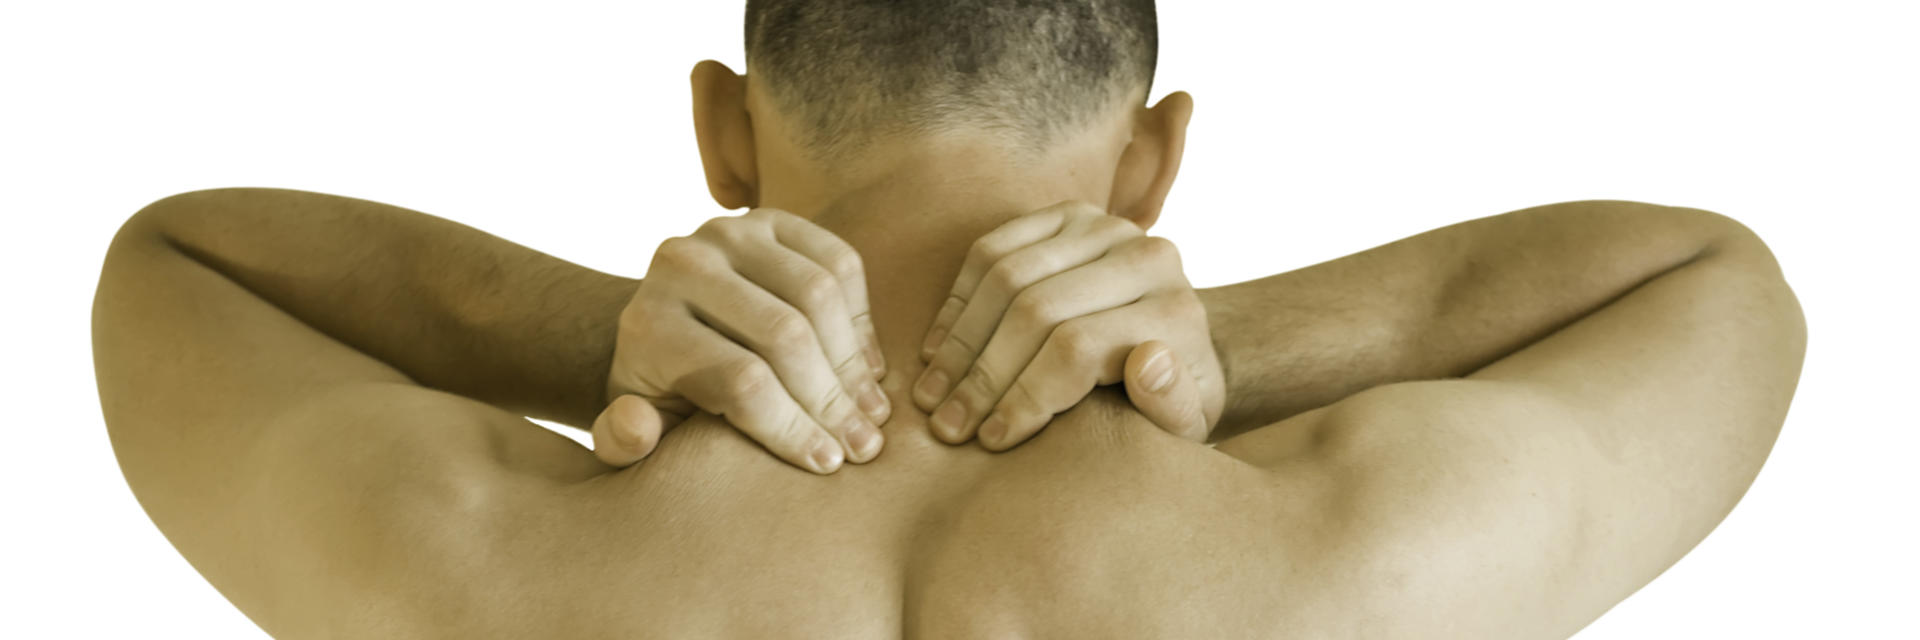 A man with a neck pain due to rheumatoid arthritis.